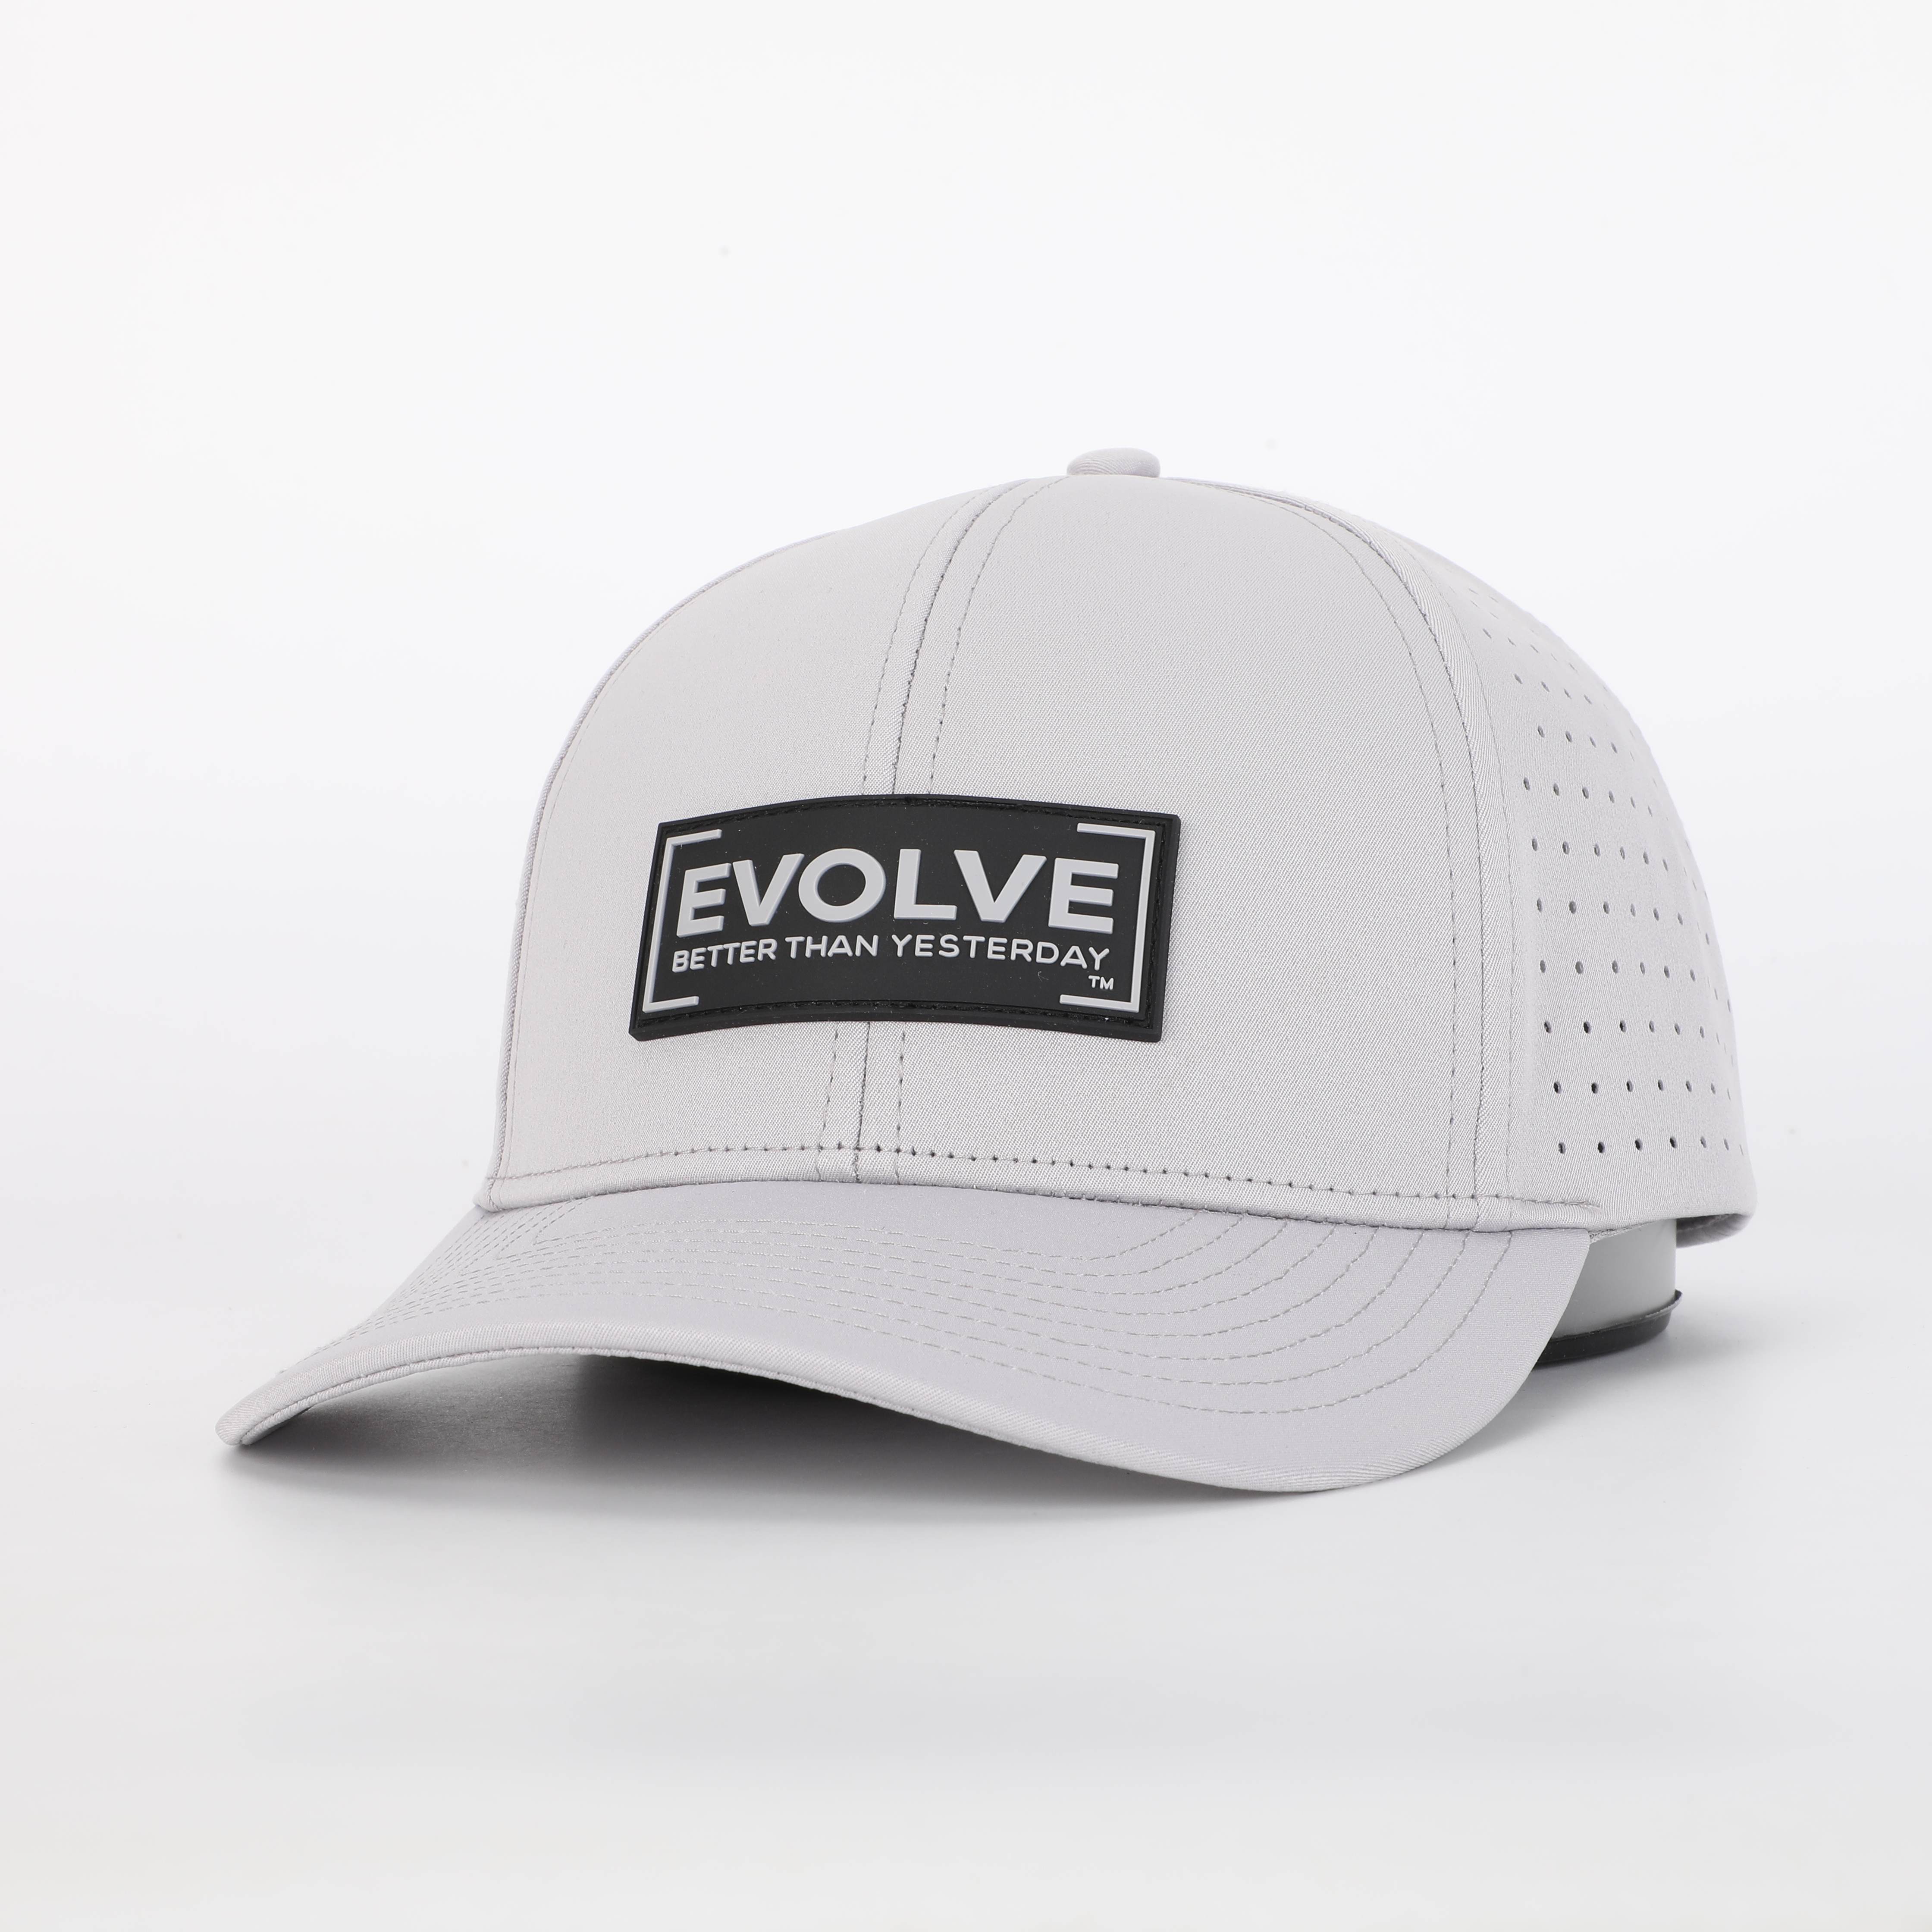 EVOLVE "Better Than Yesterday" Snapback Hat for Men and Women (Polyester Blend, Gray/Black)